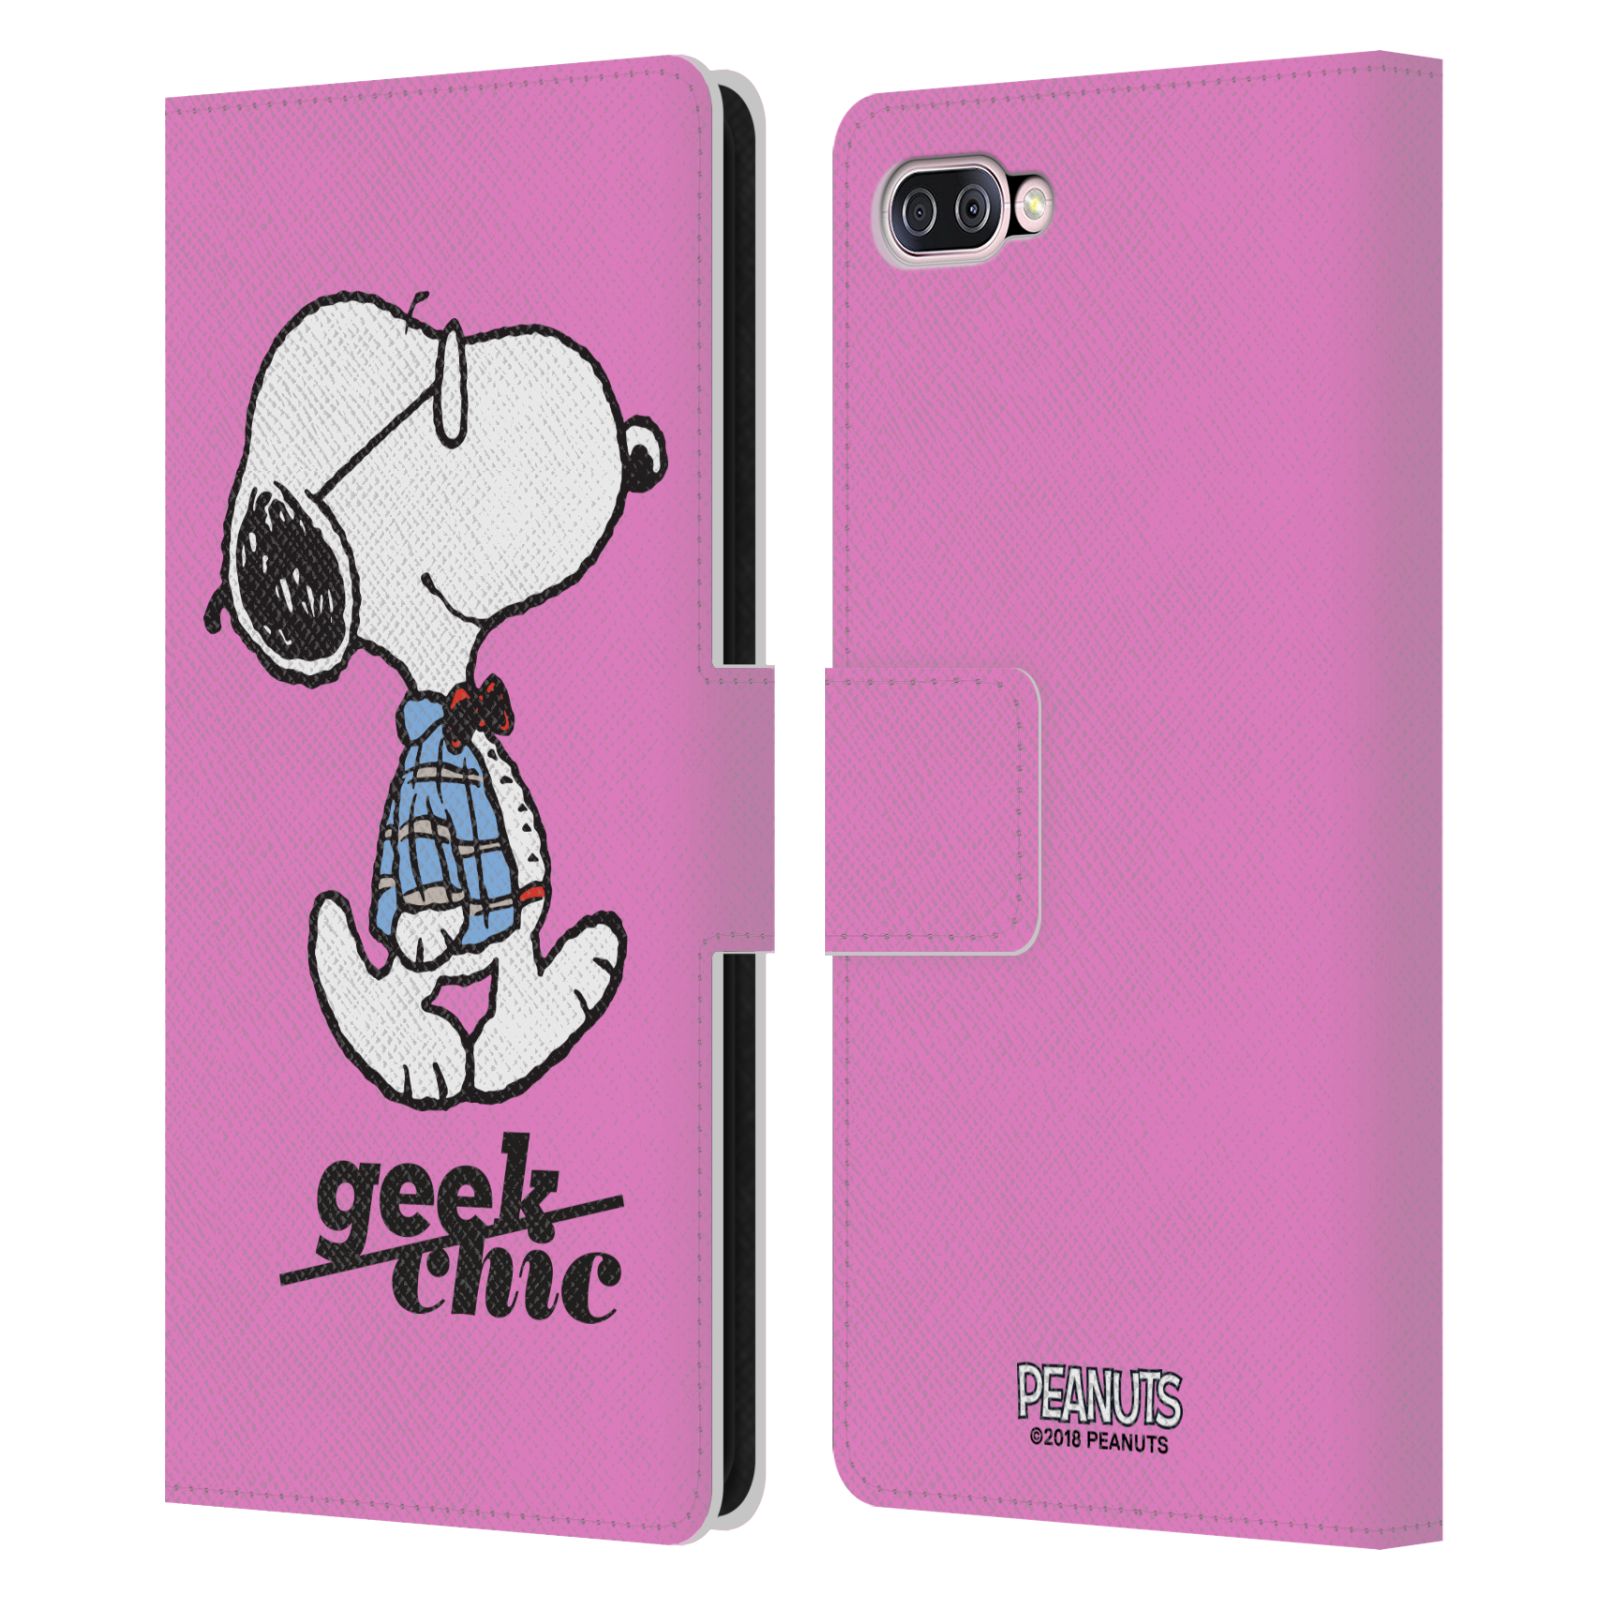 Pouzdro na mobil Asus Zenfone 4 Max ZC554KL - Head Case - Peanuts - růžový pejsek snoopy nerd